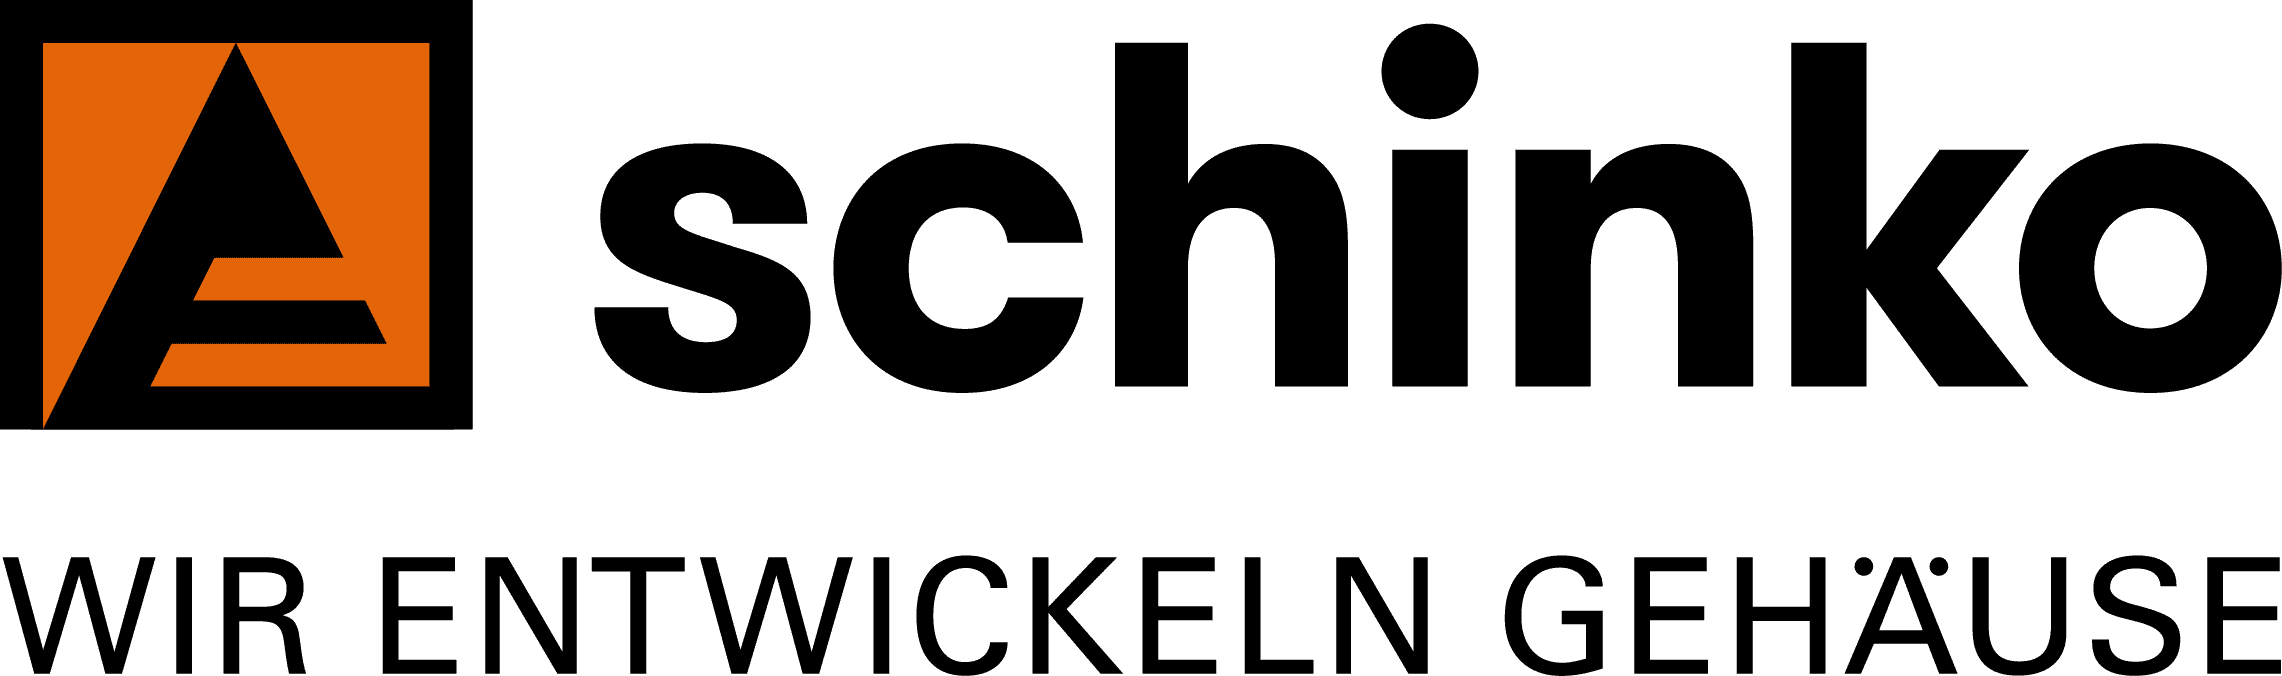 Schinko_logo